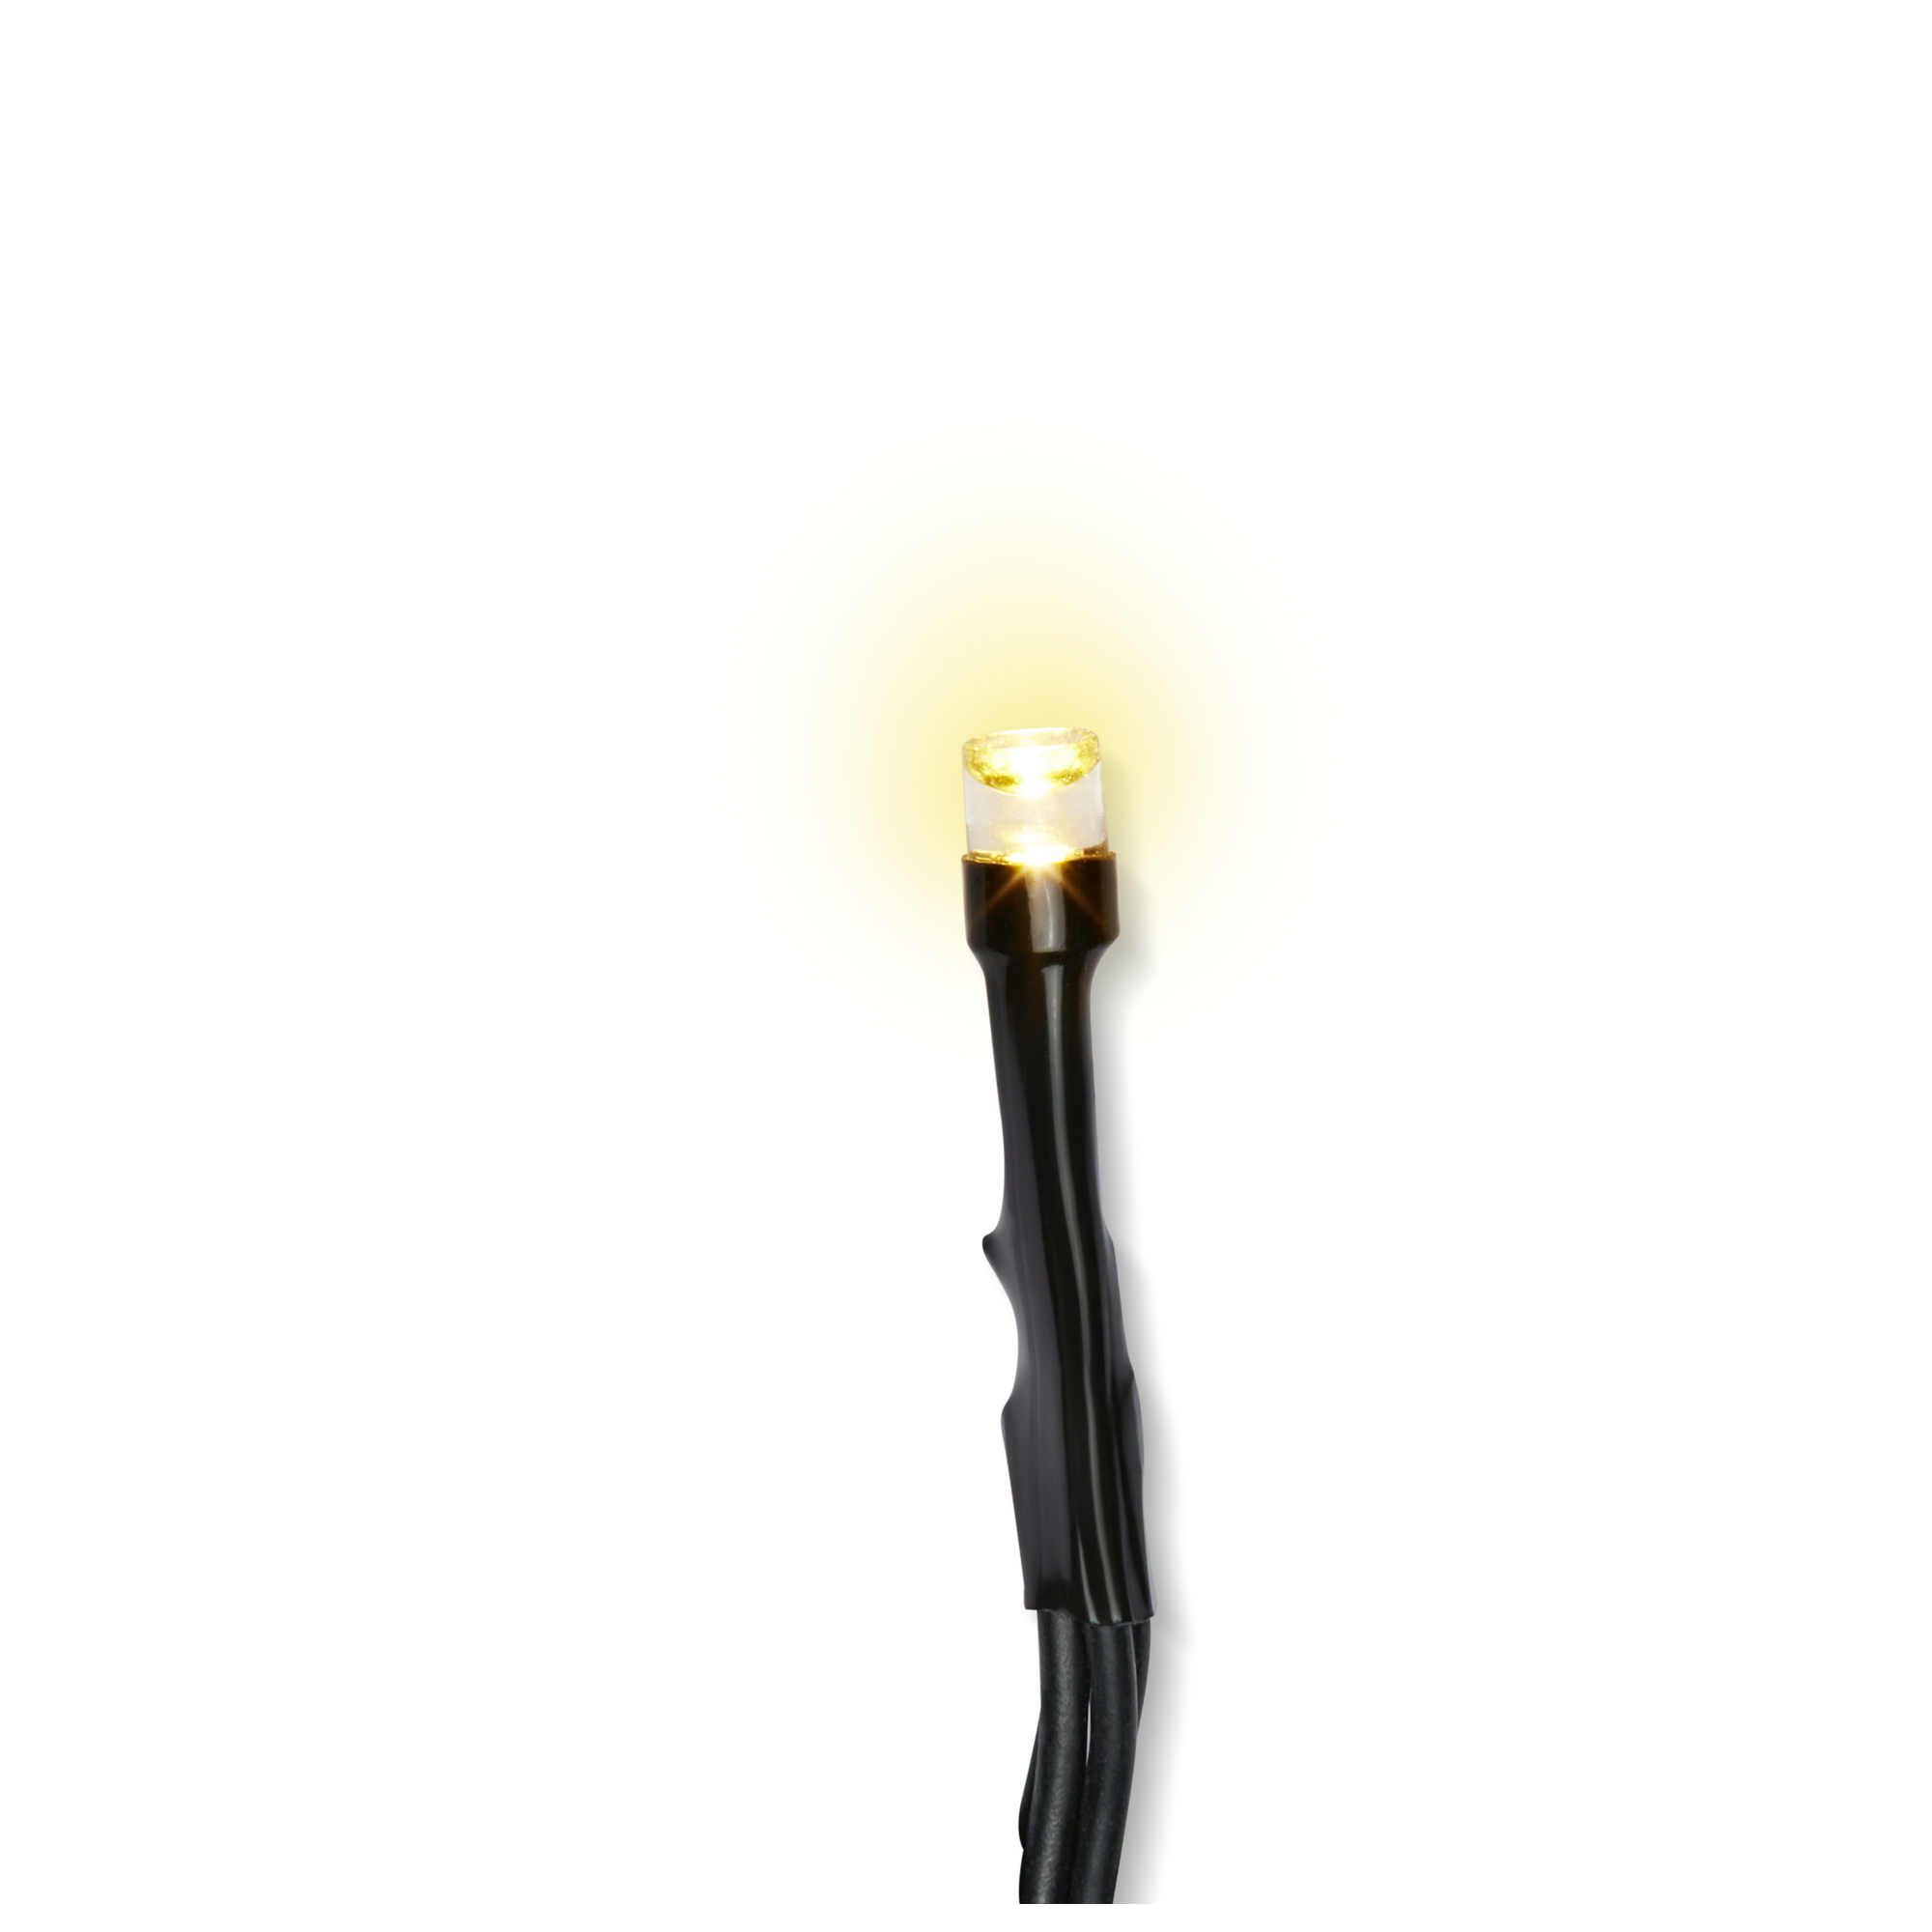 LED-Lichternetz 180 LEDs warmweiß 200 x 200 cm + product picture